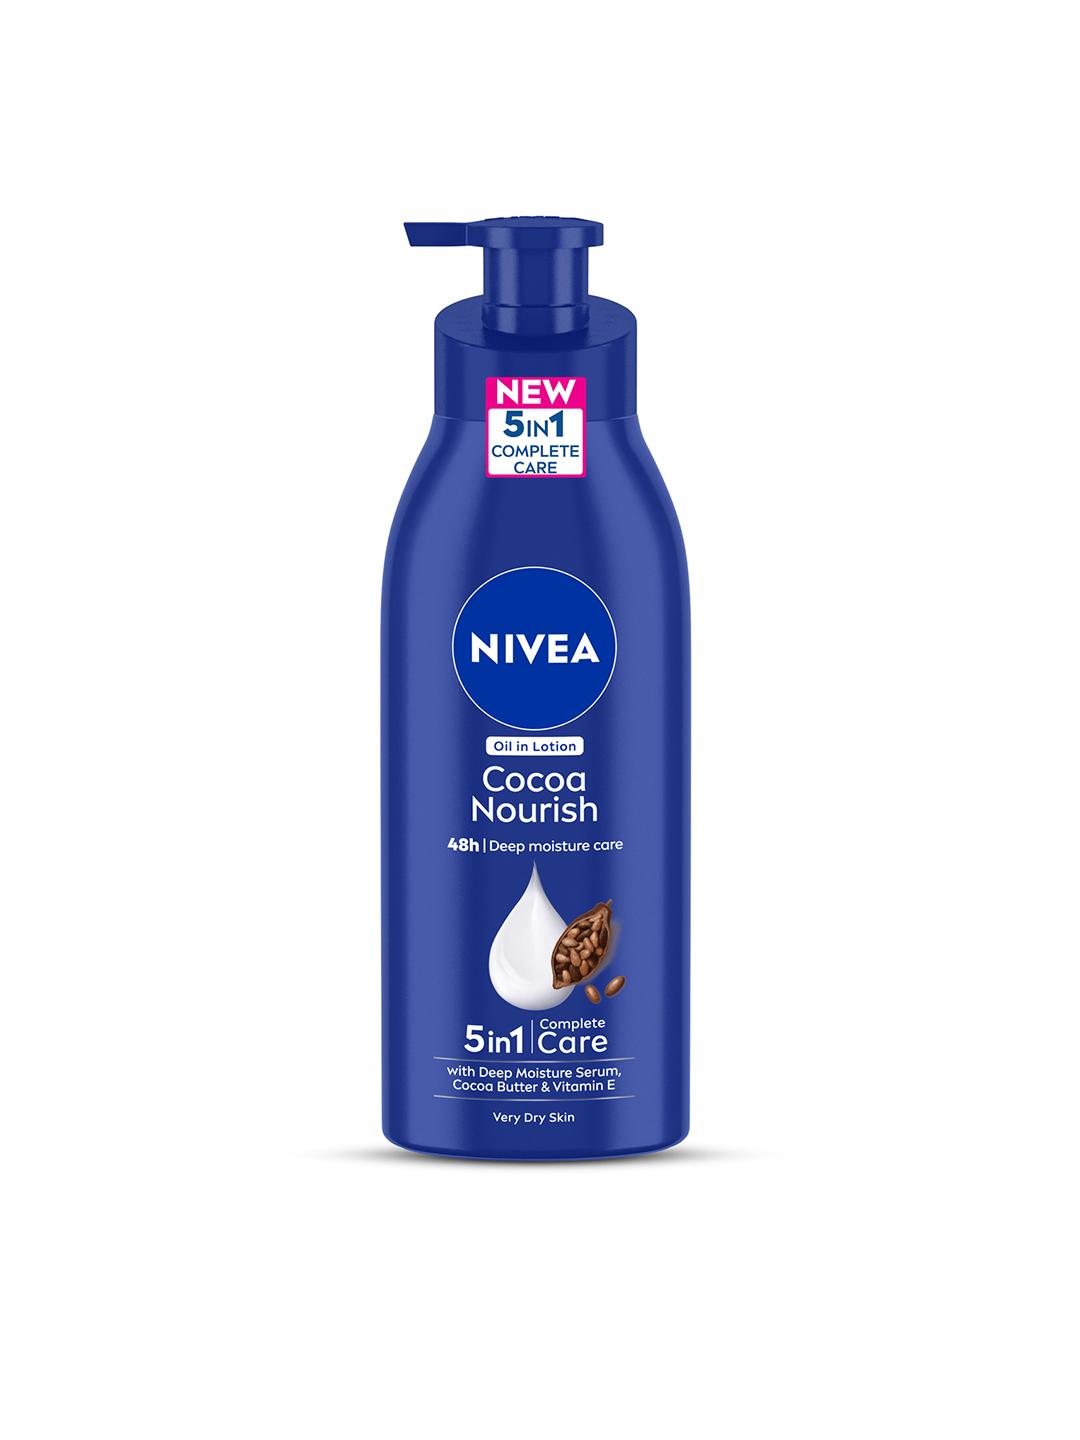 Nivea Unisex Cocoa Nourish 48h Deep Moisturising For Very Dry Skin Body Lotion 400 ml